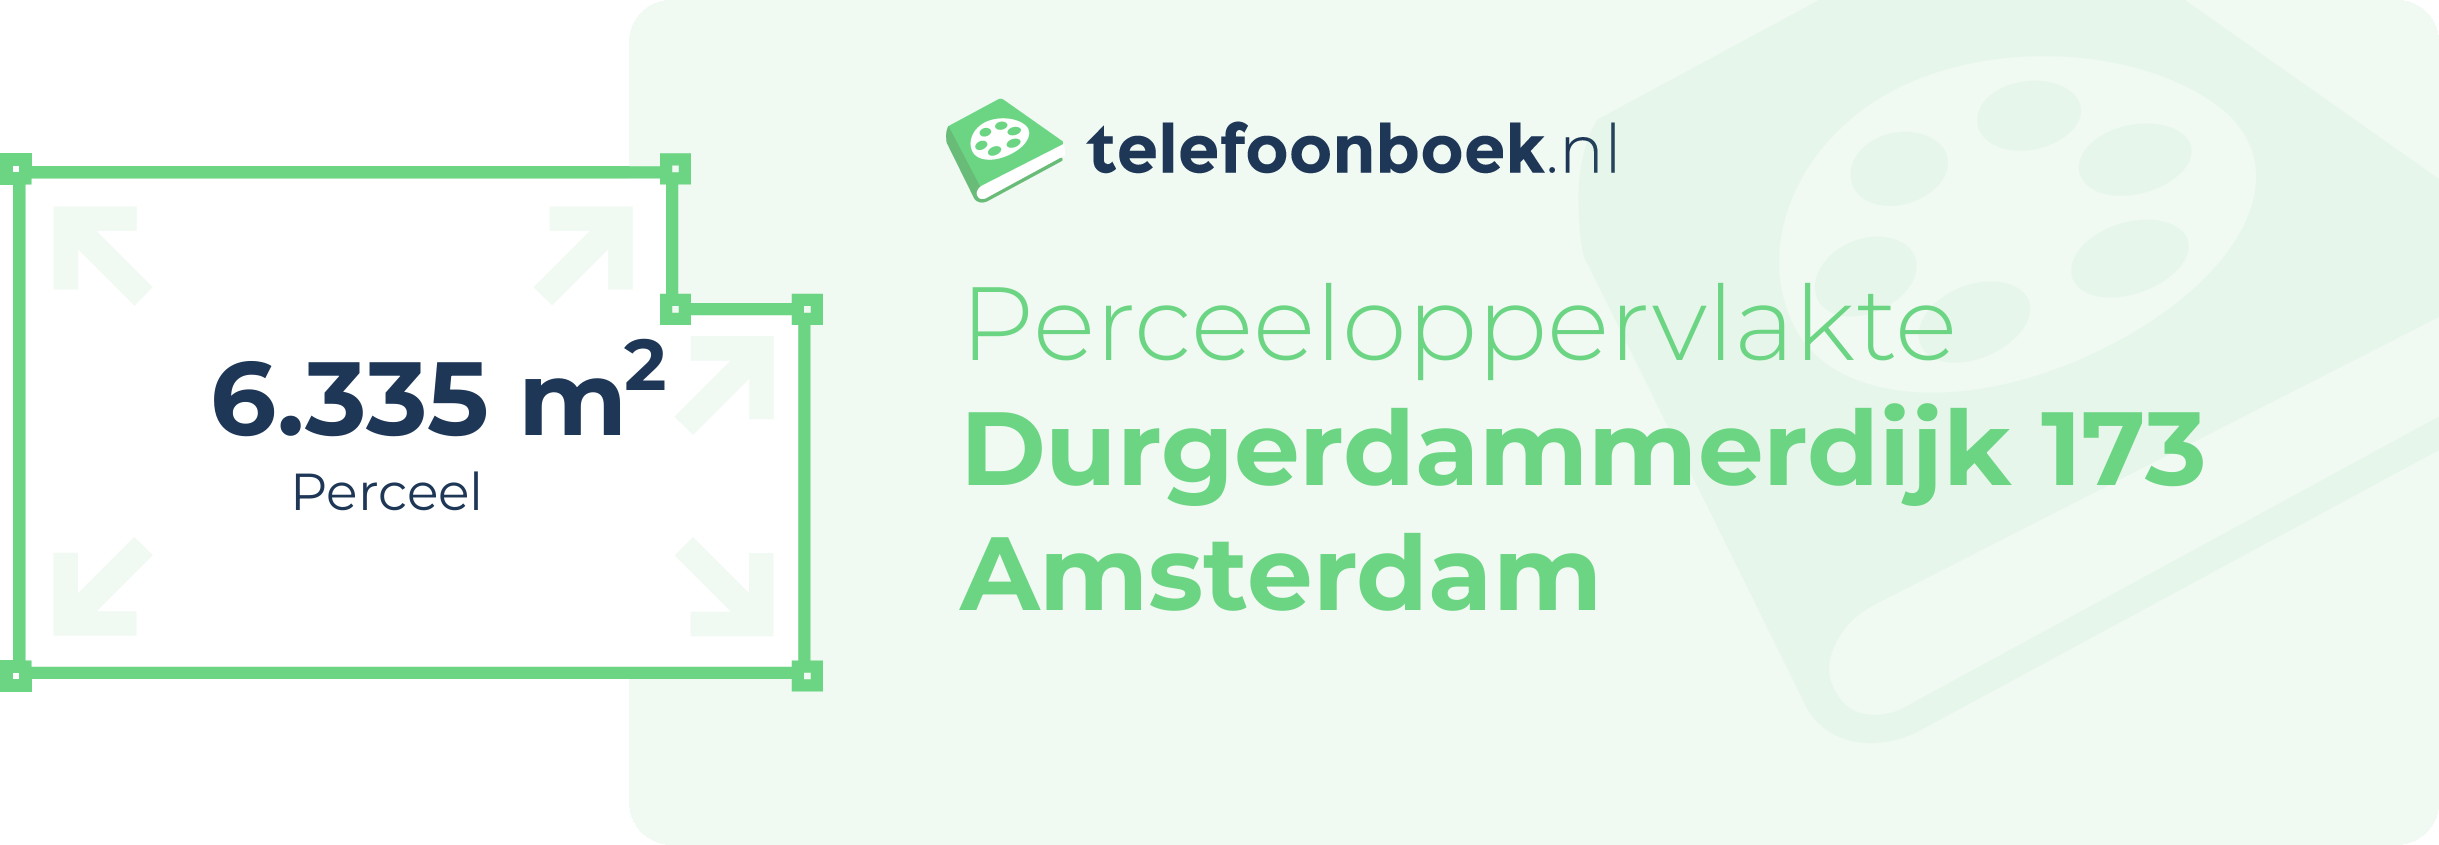 Perceeloppervlakte Durgerdammerdijk 173 Amsterdam